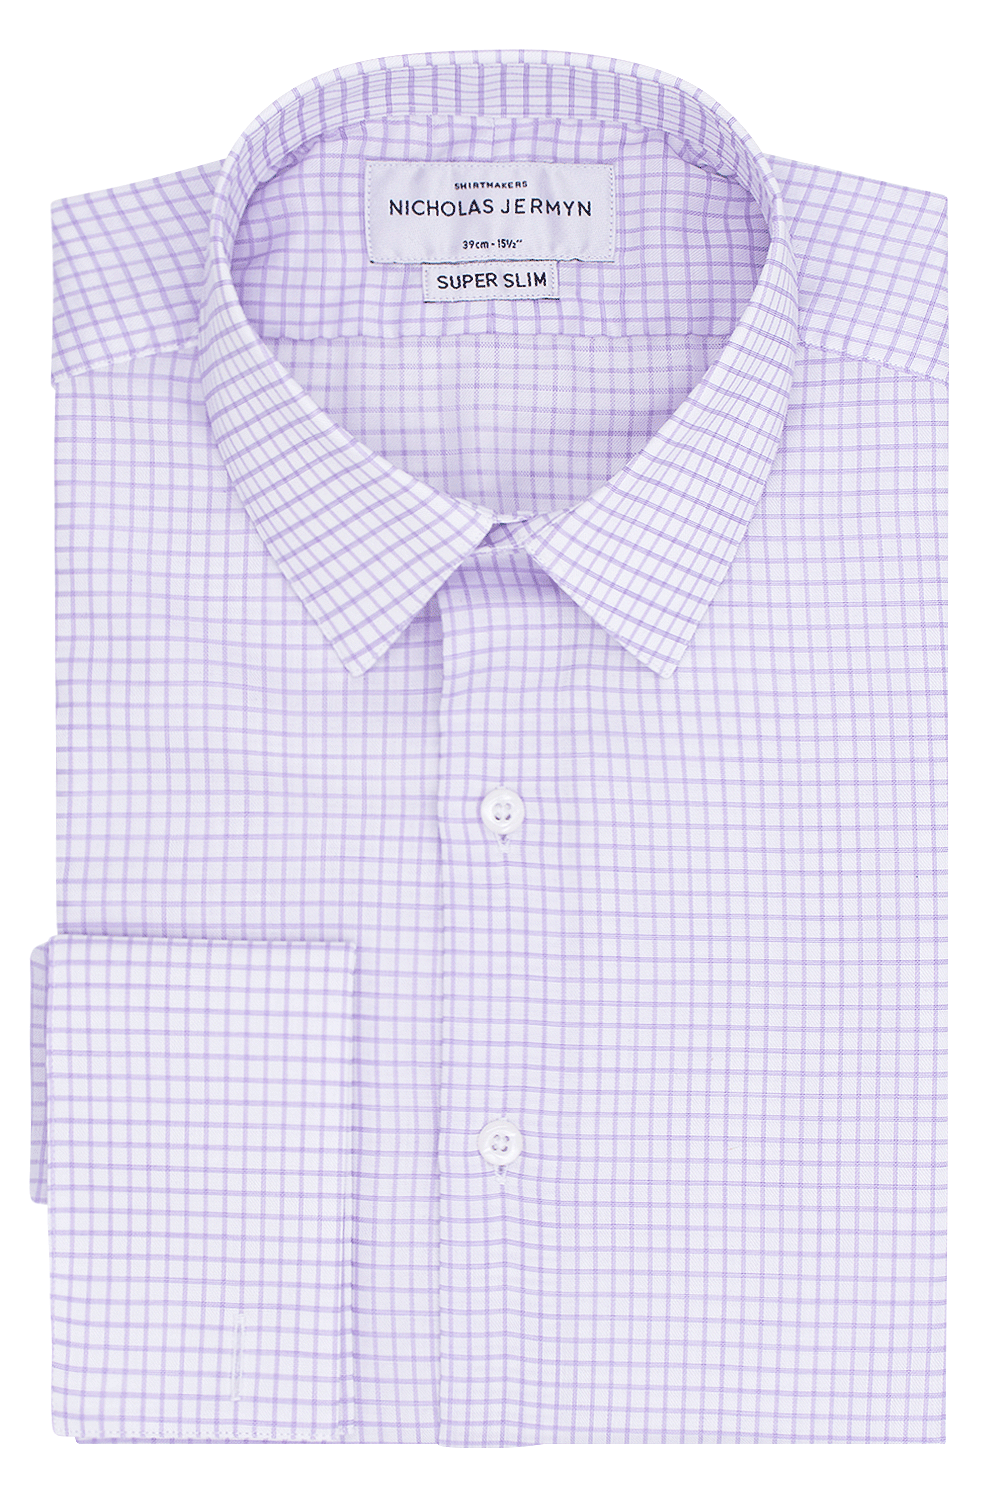 Pickford Check Purple - Slim Fit